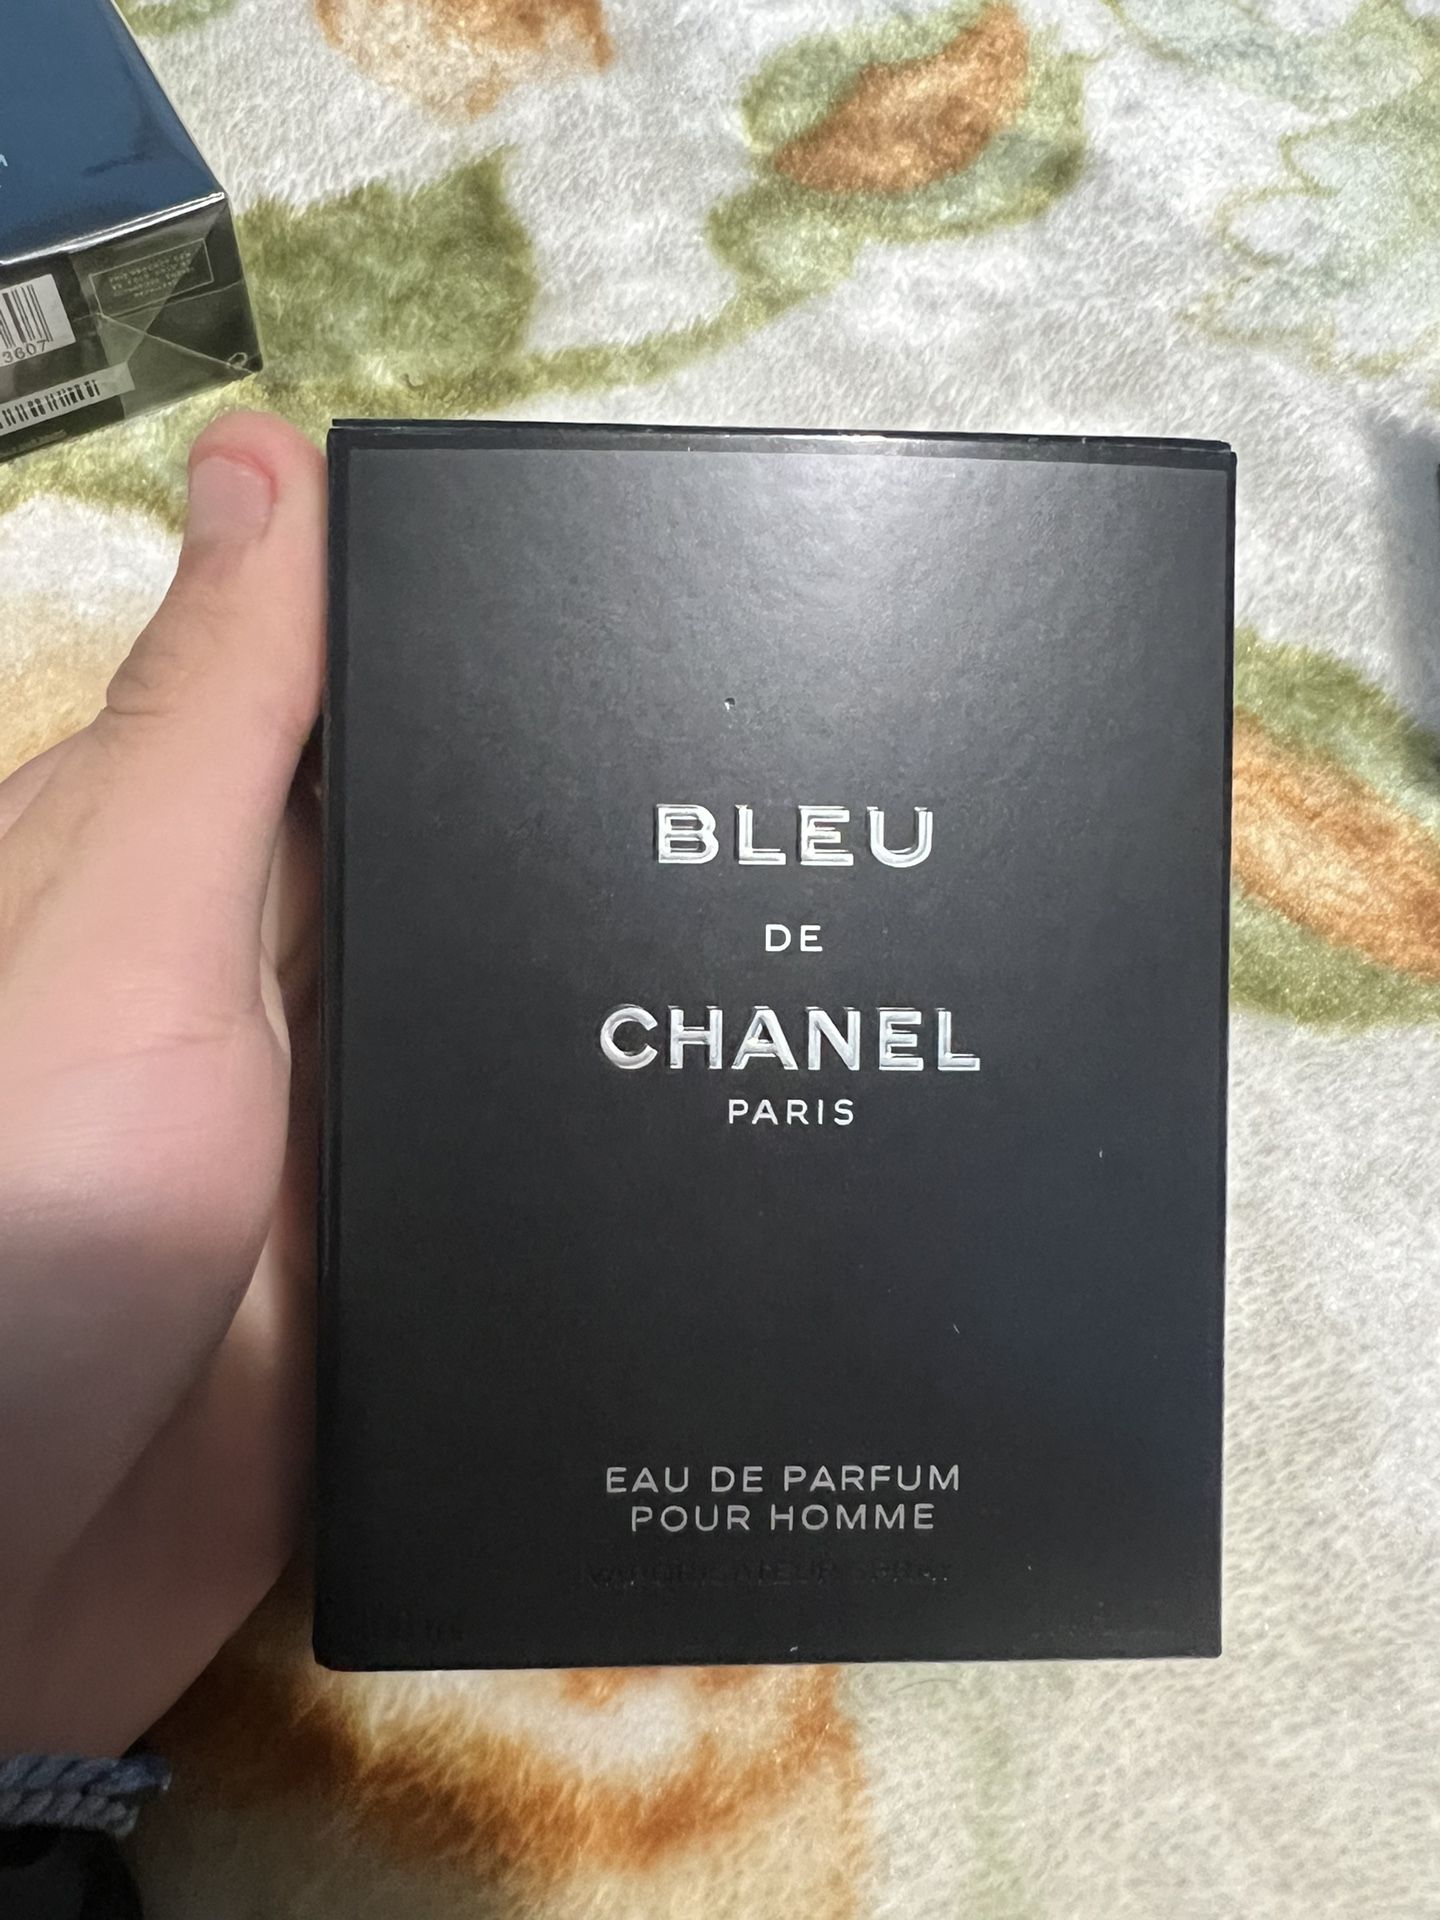 Chanel Cologne